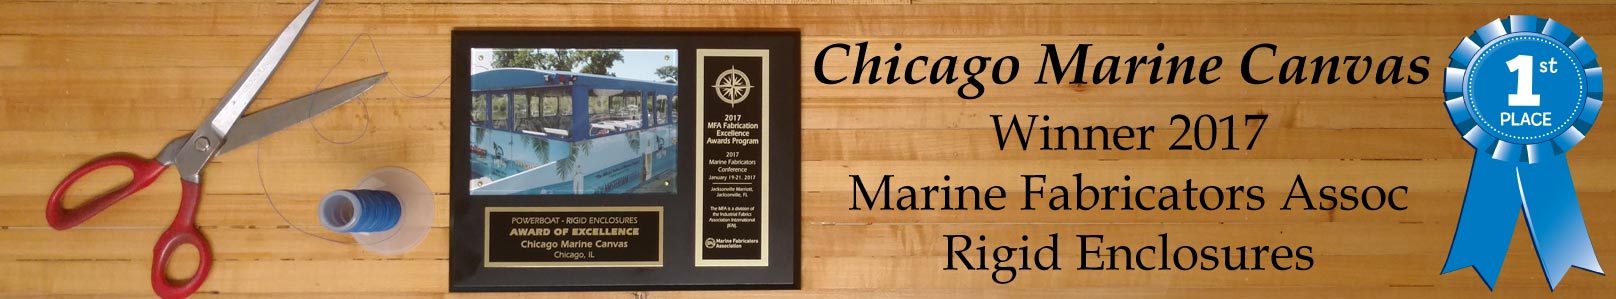 Chicago Marine Canvas - 2017 Marine Fabricator Association Winner